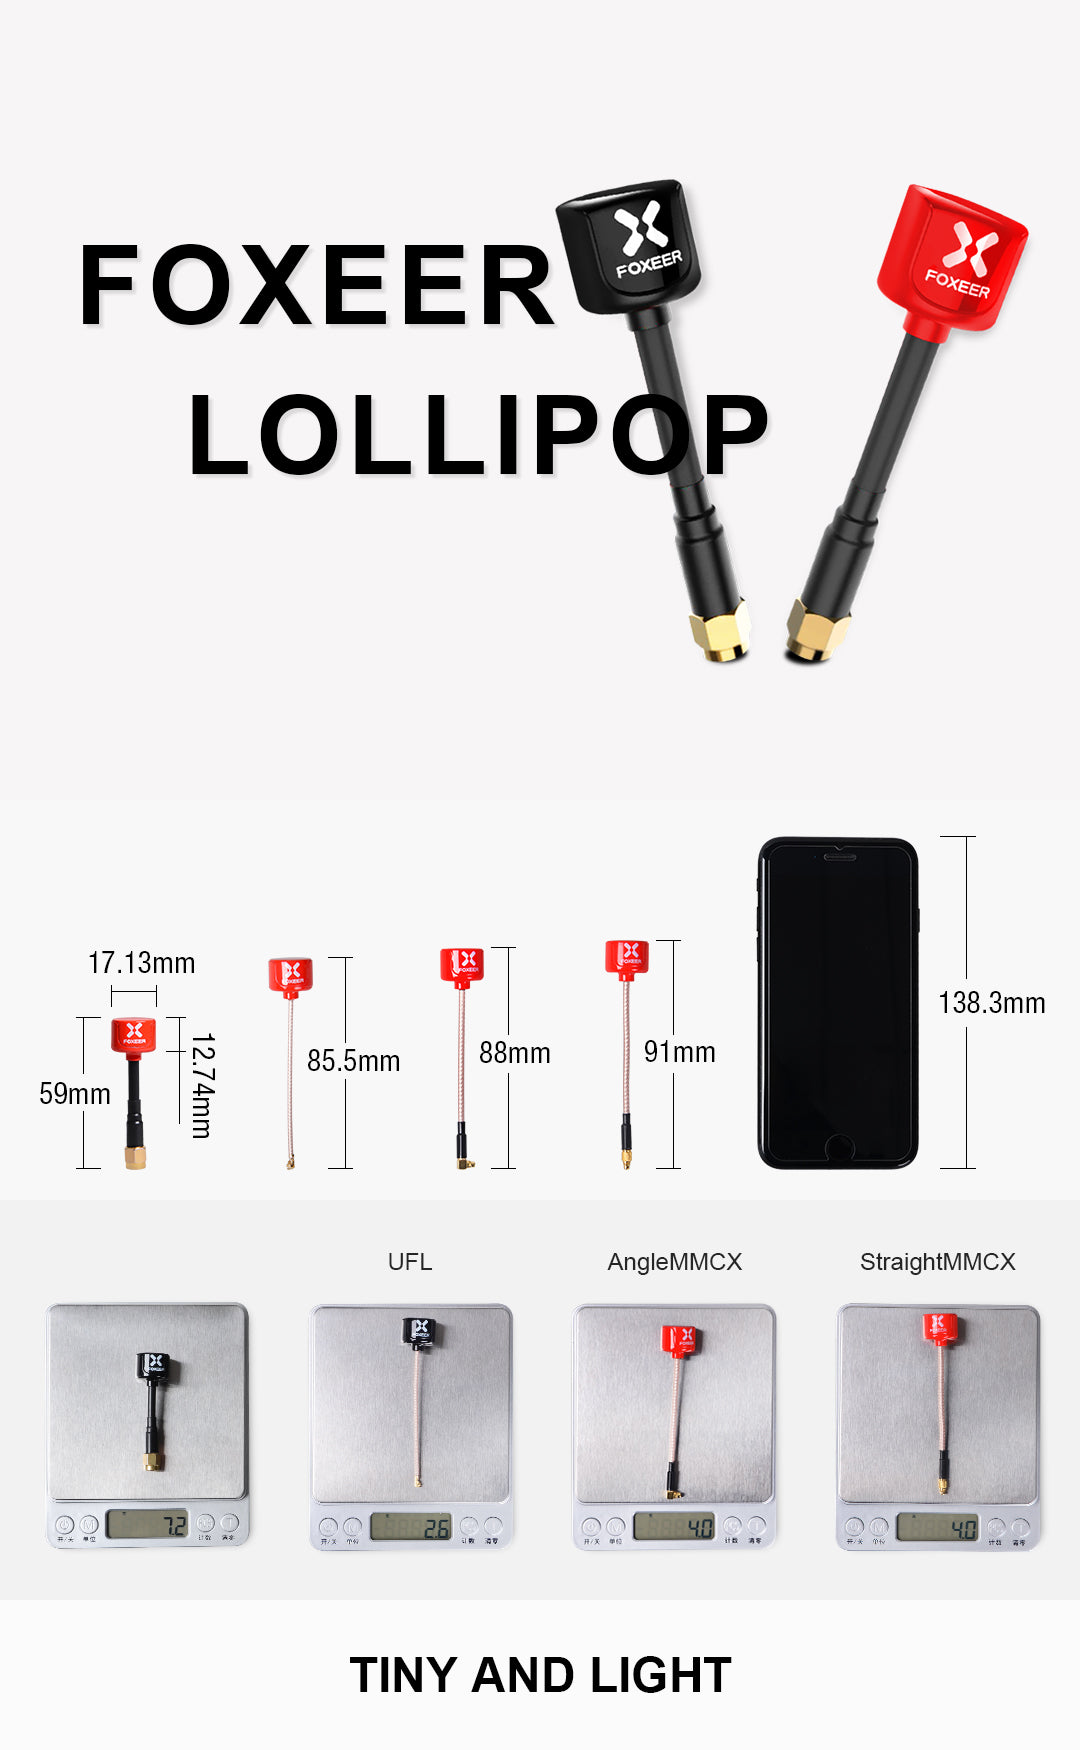 Foxeer Lollipop 5.8G RHCP FPV Antenna (2pcs)